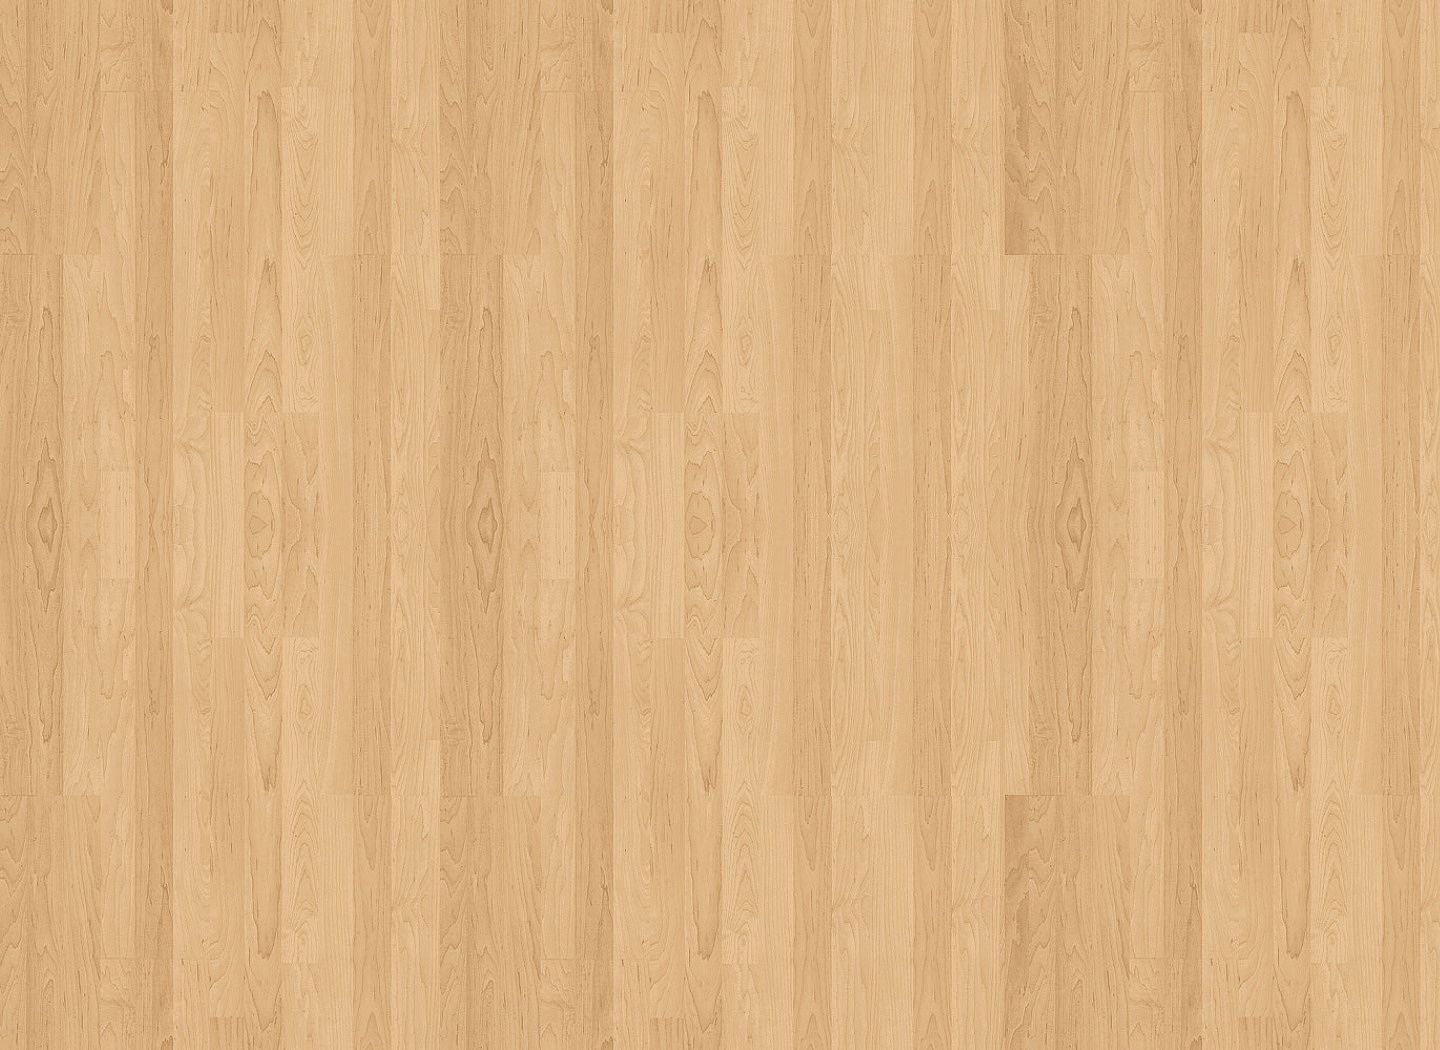 Desk Top Wood: Wood Wallpapers, Red Wood Desktop Background ...